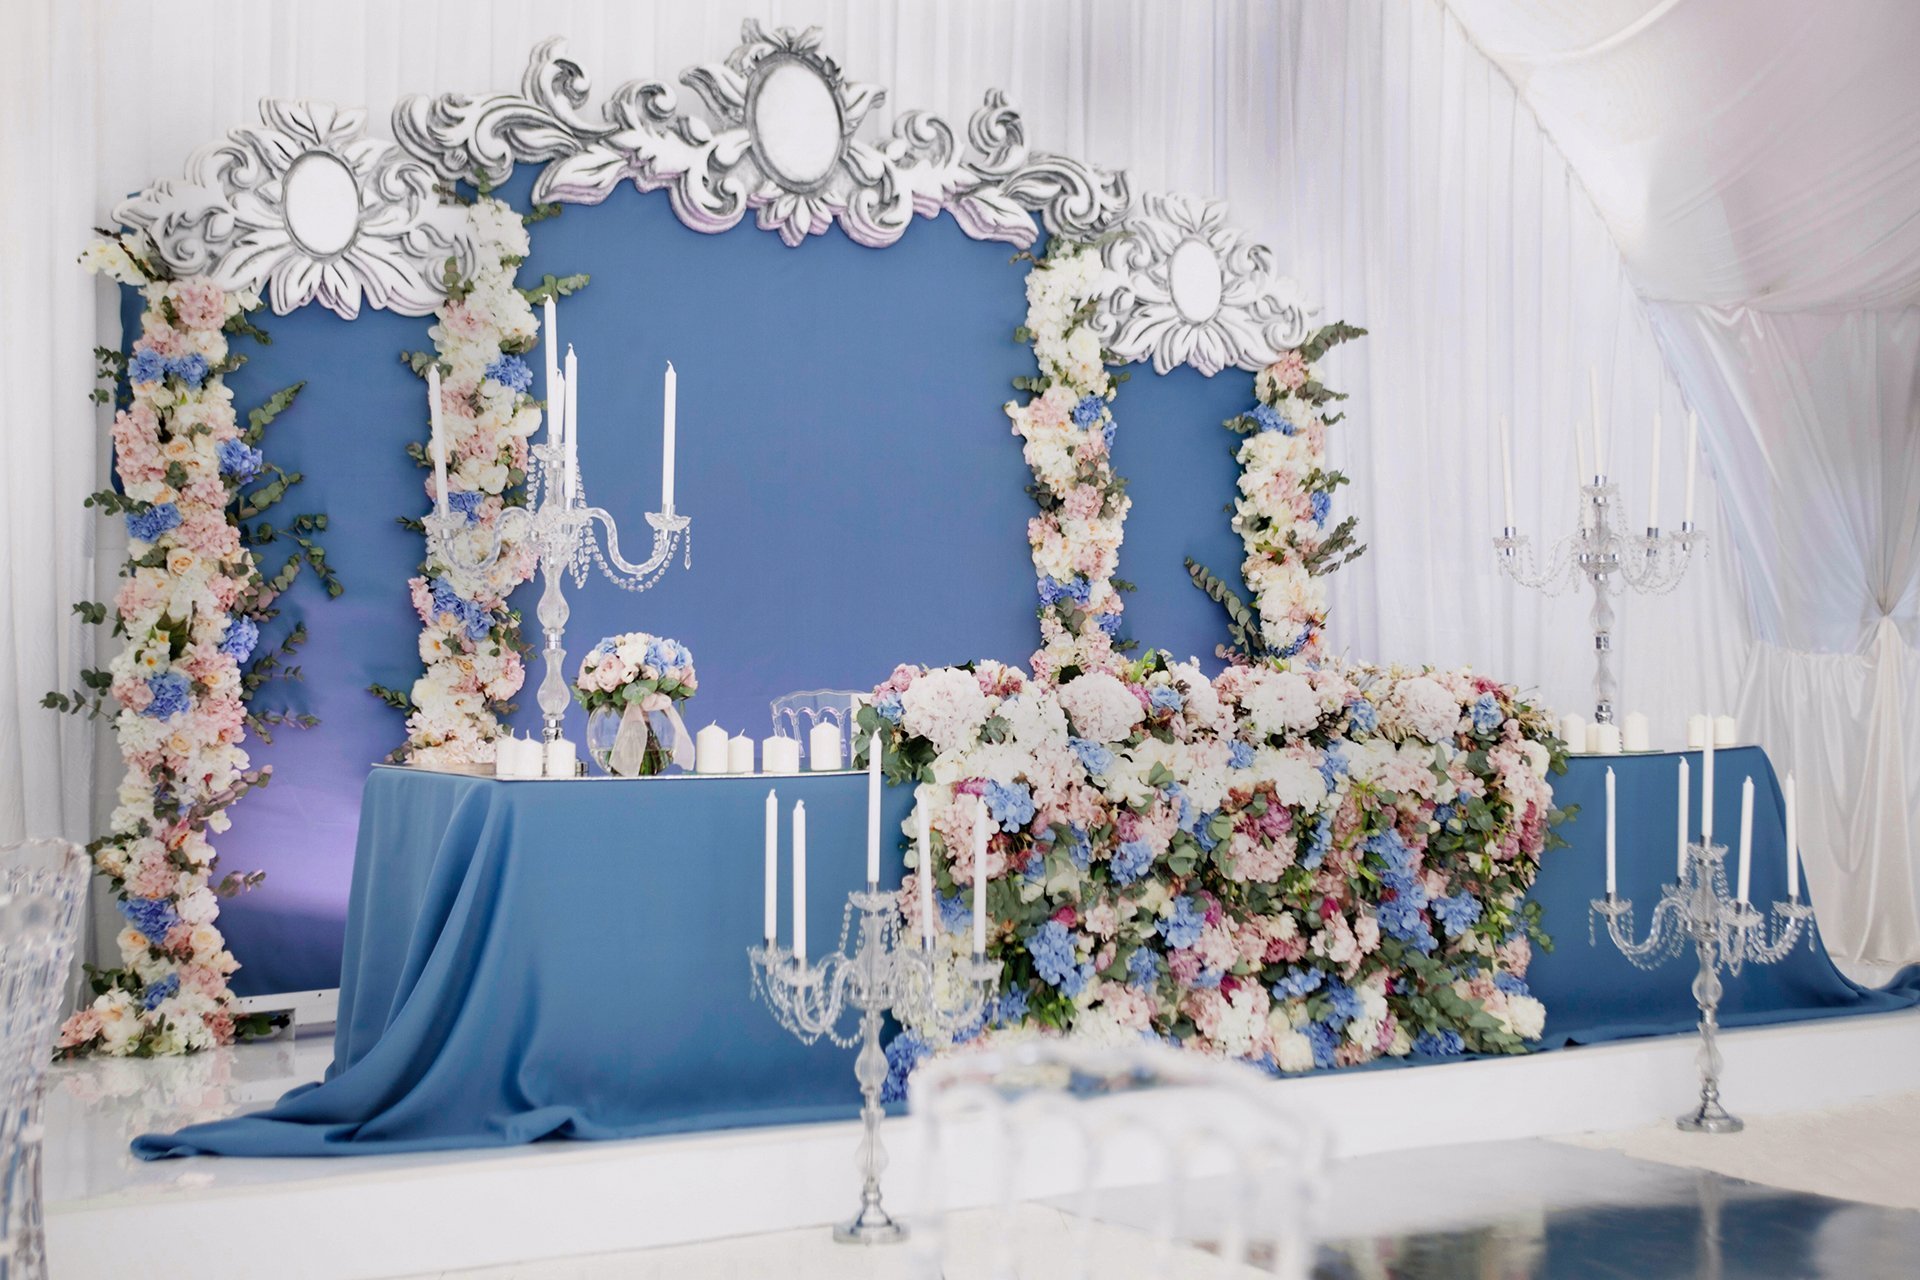 Серебряная фотозона. Декор на свадьбу. Декорации на свадьбу. Фотозона на свадьбу. Фотозона на свадьбу в голубом цвете.